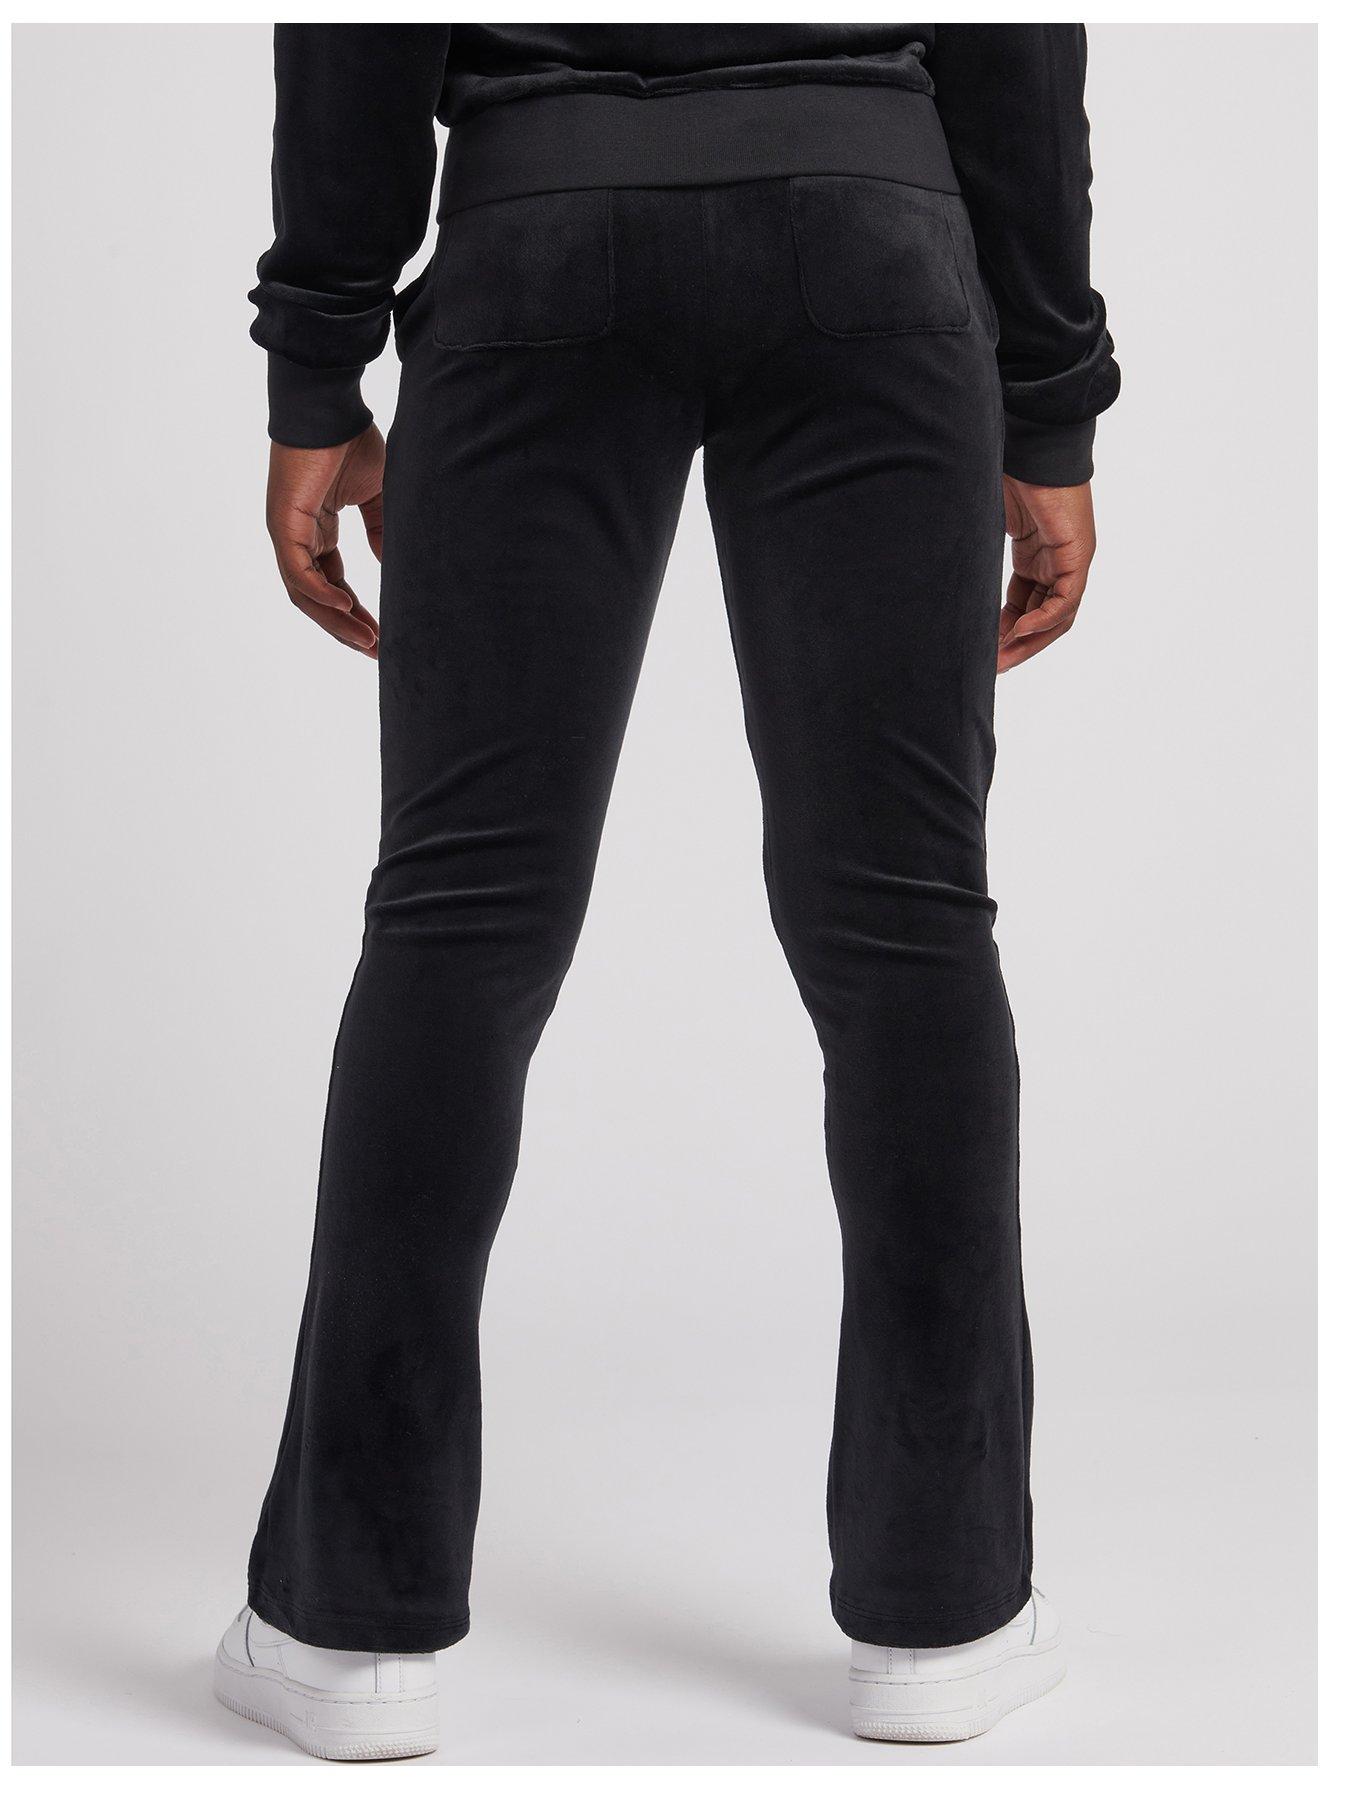 32 Degrees, Pants & Jumpsuits, 32 Degrees Ladies Side Pocket Jogger Black